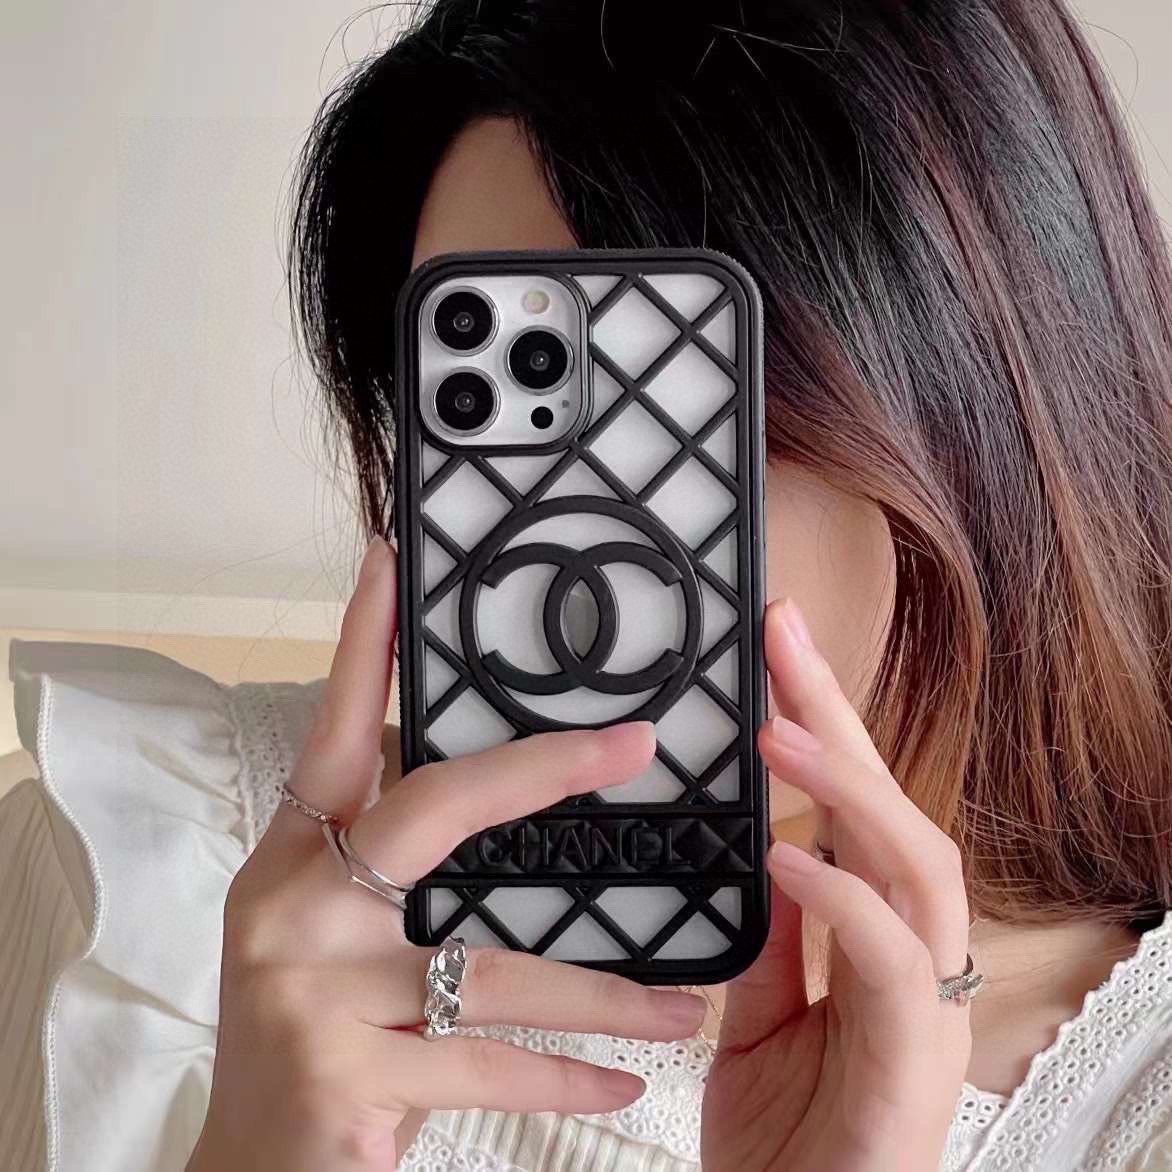 How to Buy Replcia
 Chanel Phone Case Openwork